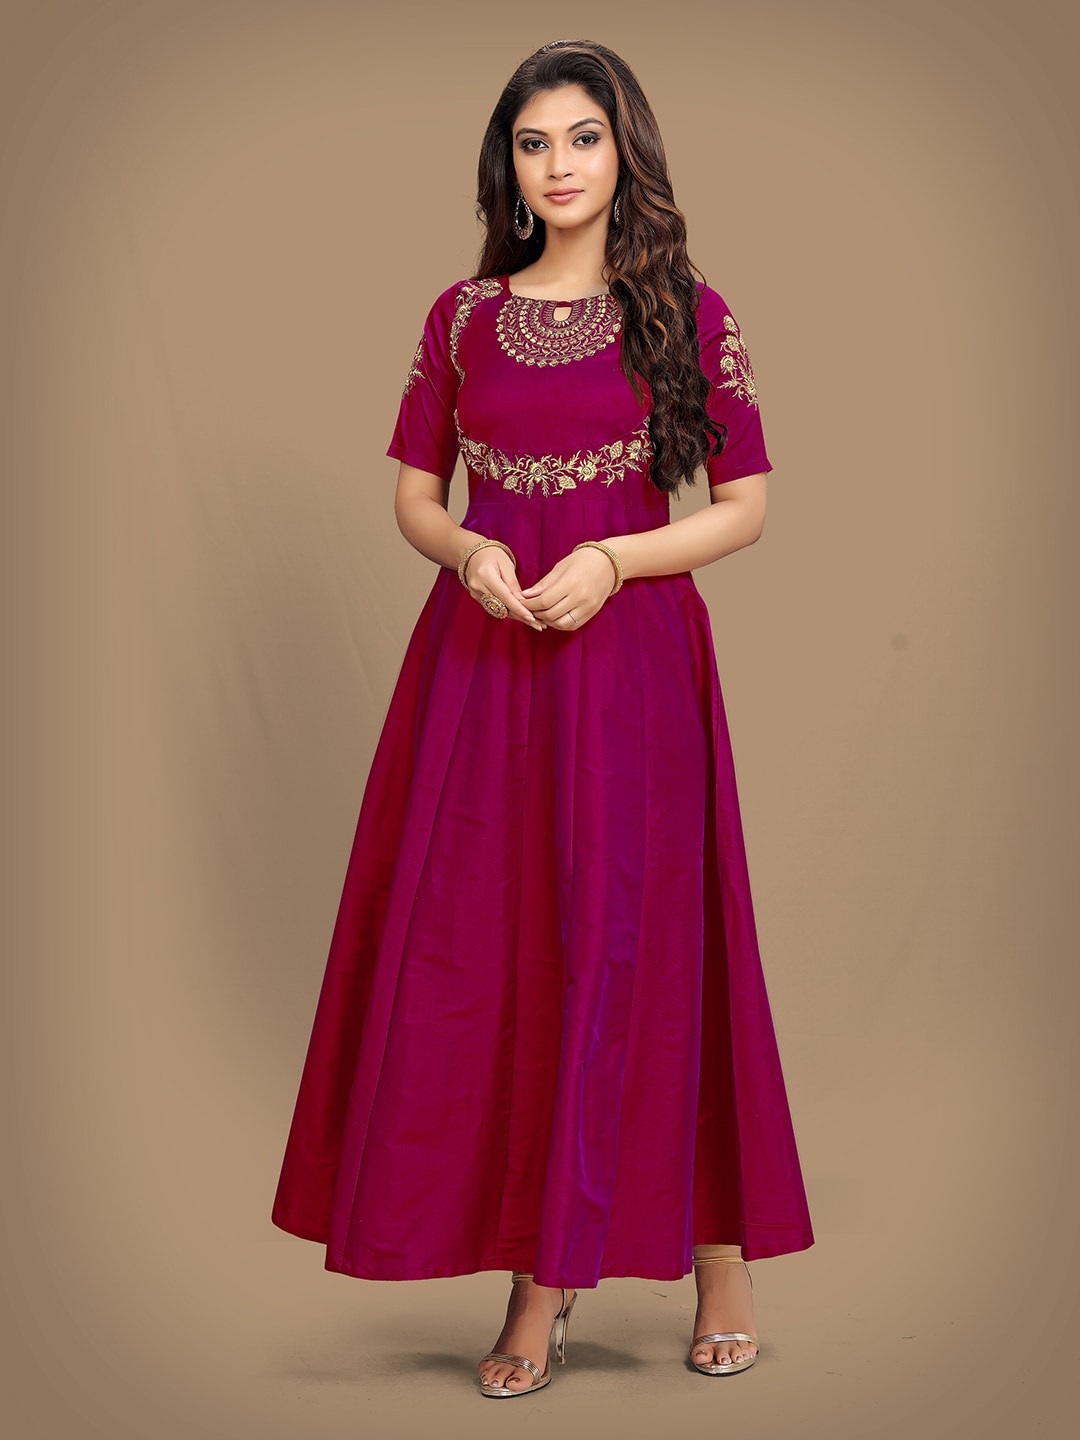 Sarvayog Fashion Women's Purple & jester red Floral Embroidered Liva Tiered Anarkali Kurti Price in India